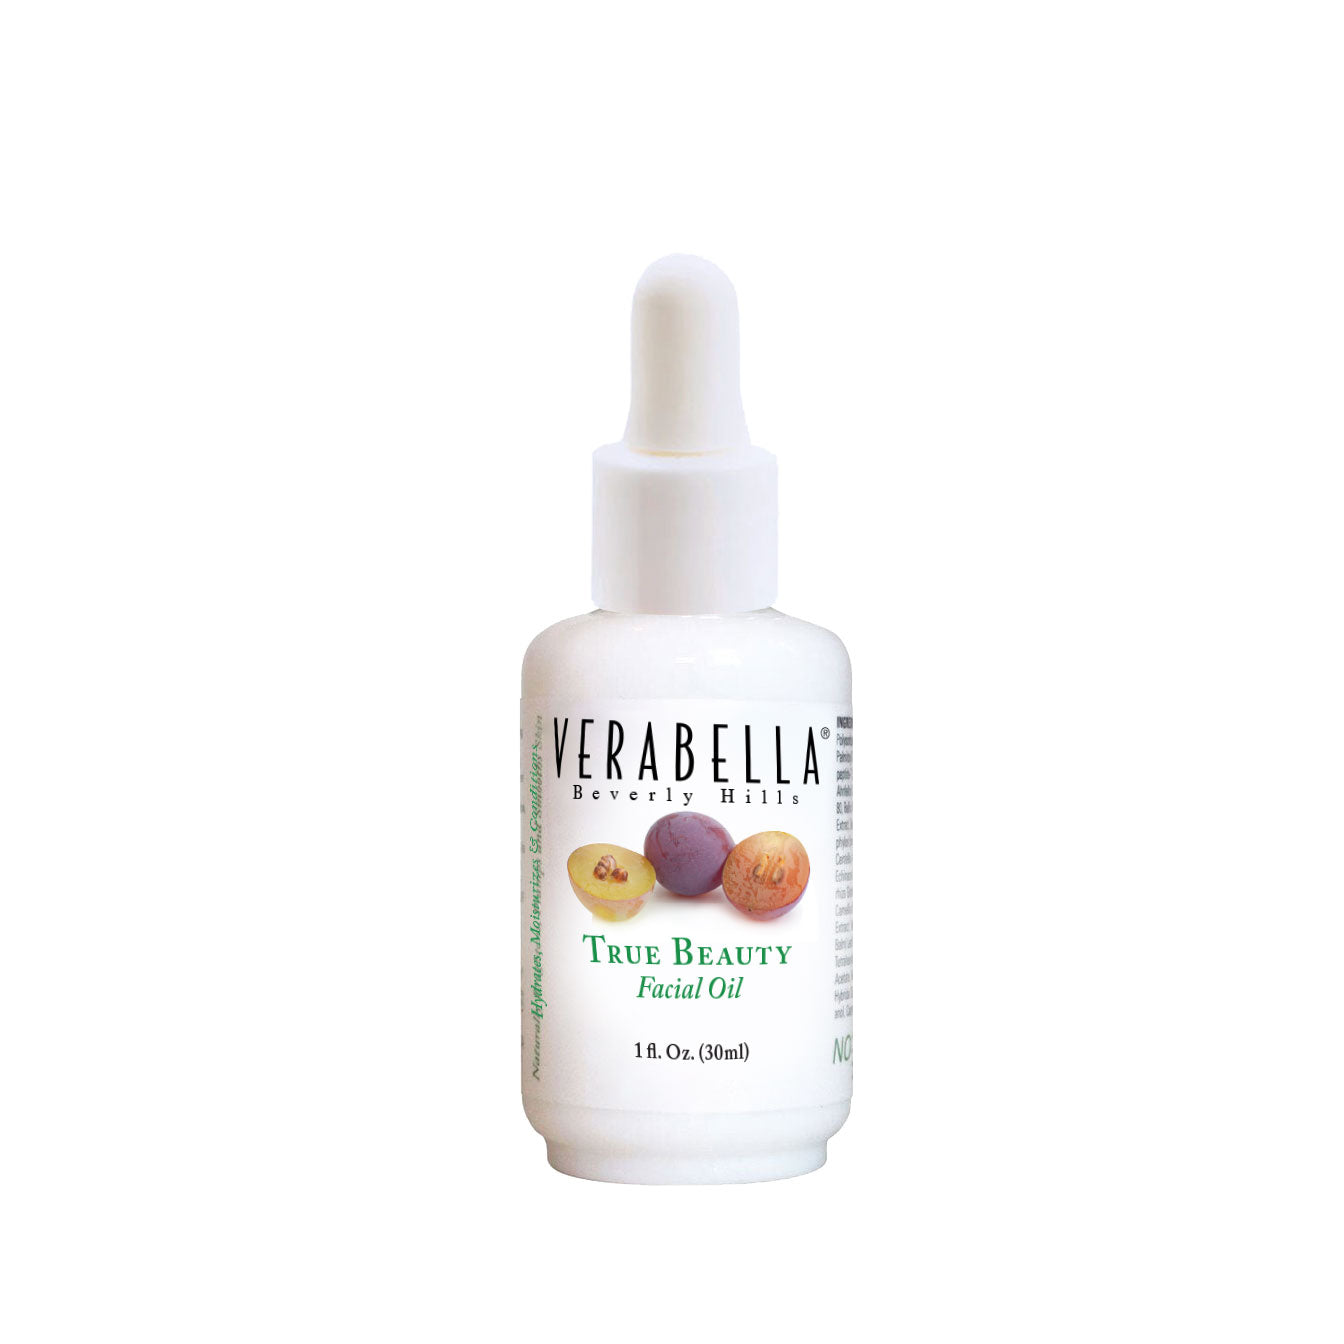 Verabella True Beauty Oil product image